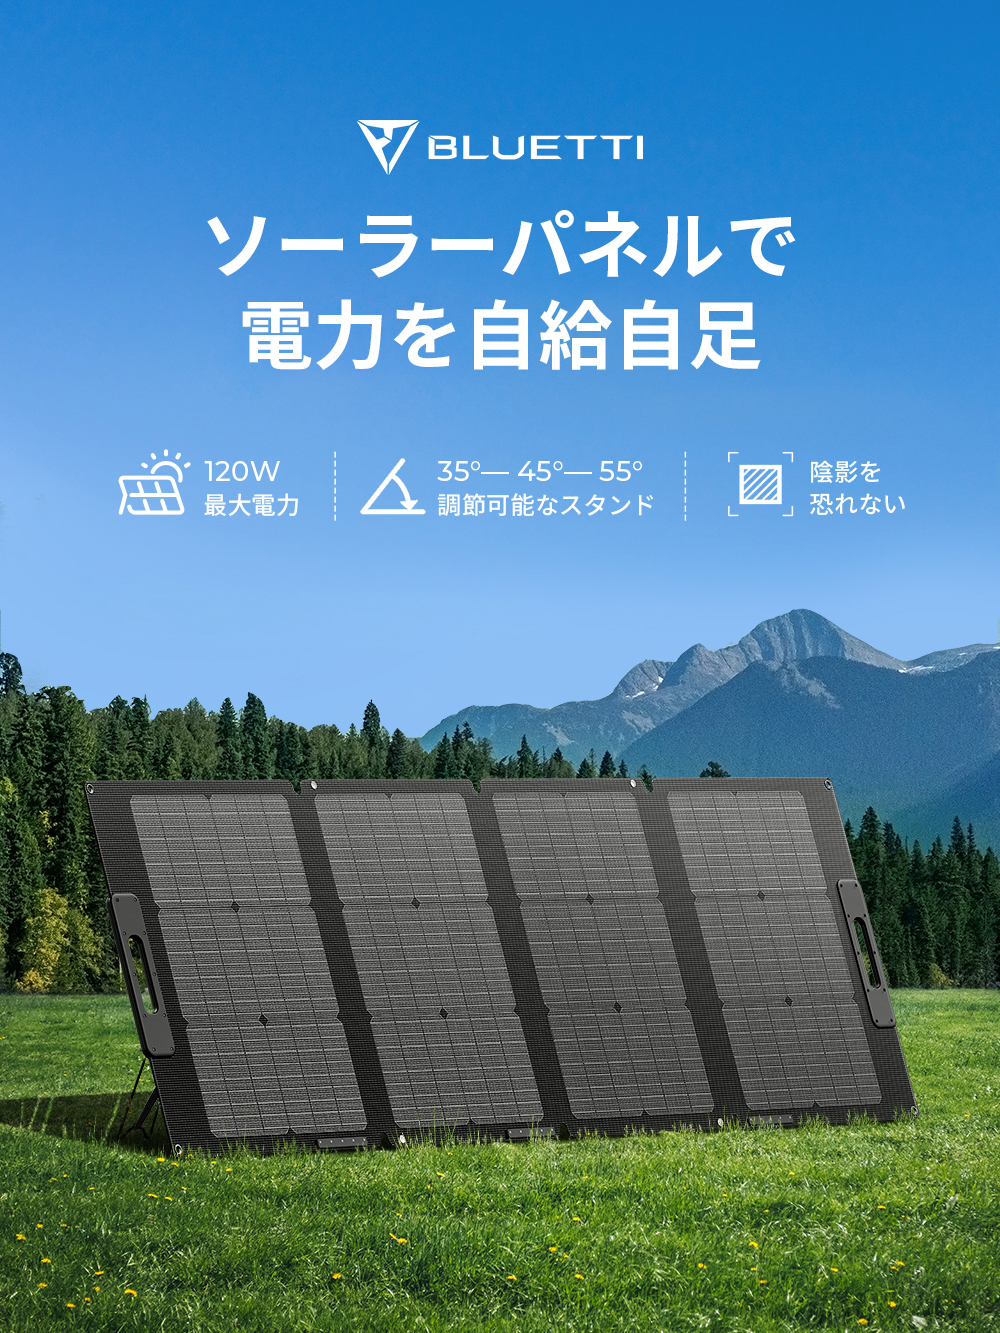 BLUETTI JAPAN ショップBLUETTI PV120S ソーラーパネル 120W折り畳み式 